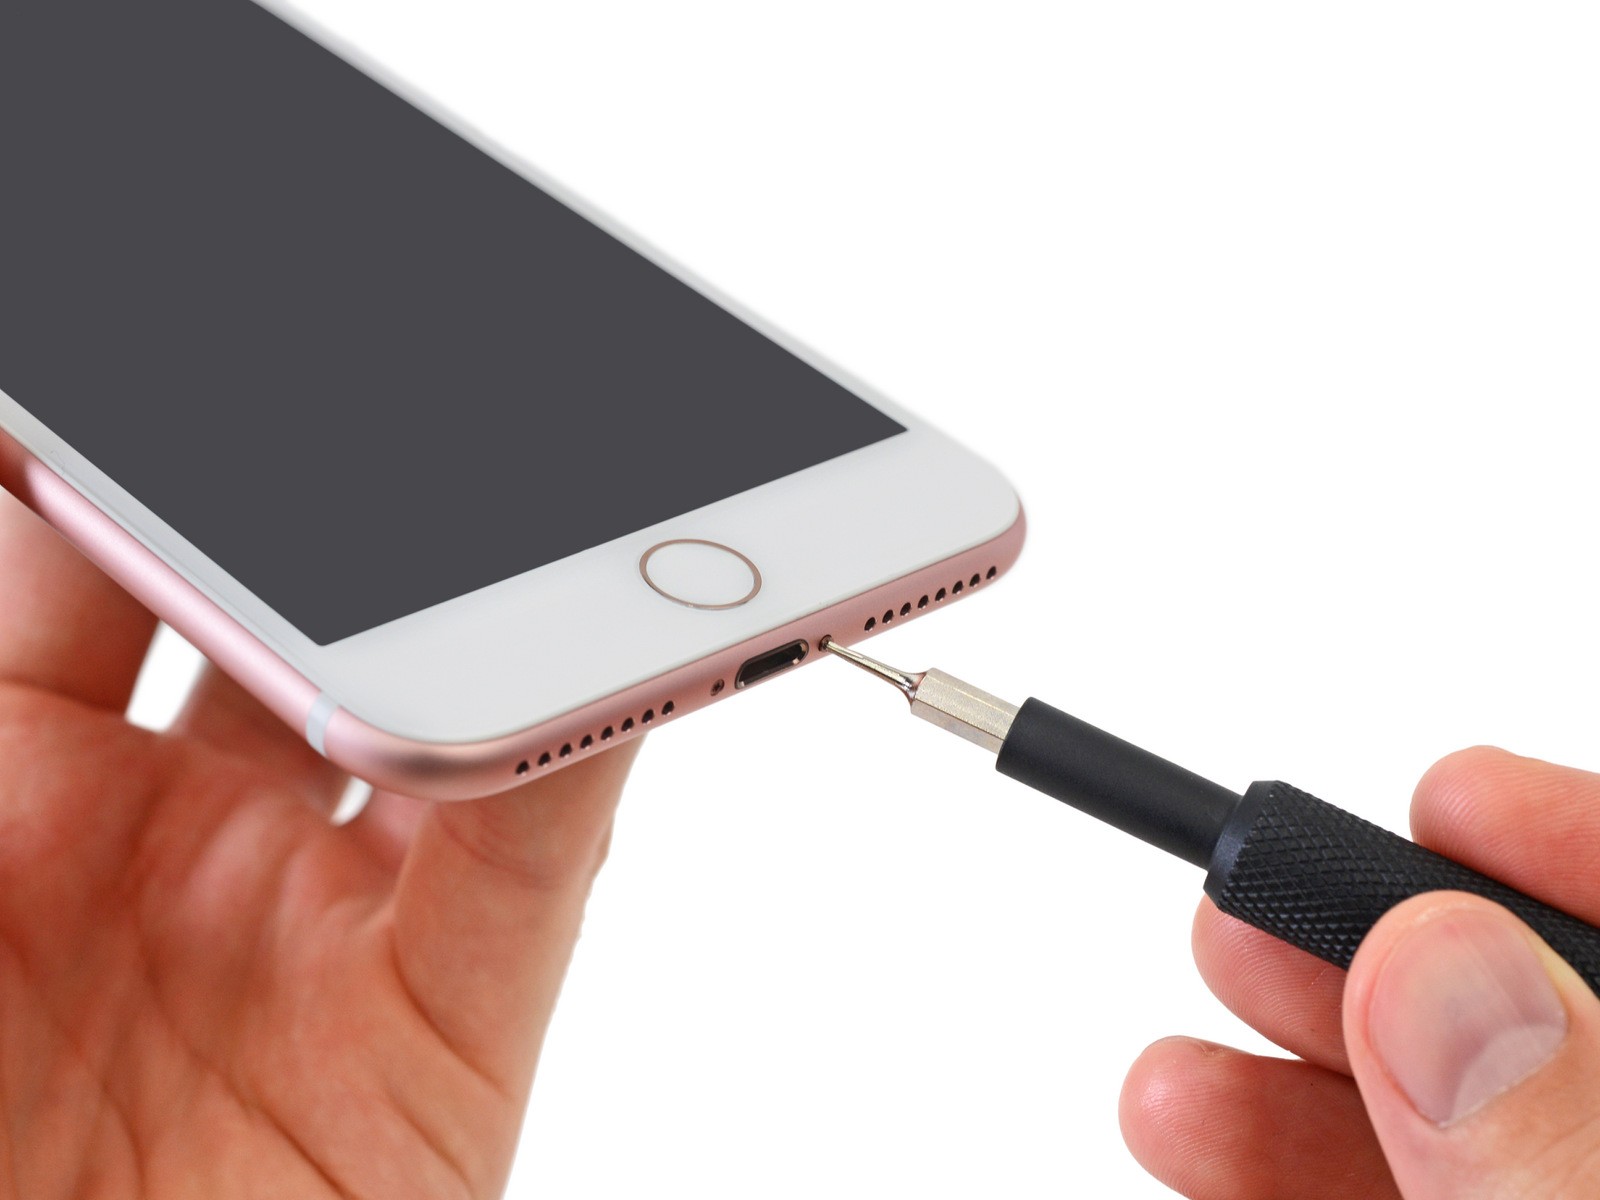 Apple iPhone 7 Plus Comes with 2,900 mAh Battery, Teardown Reveals